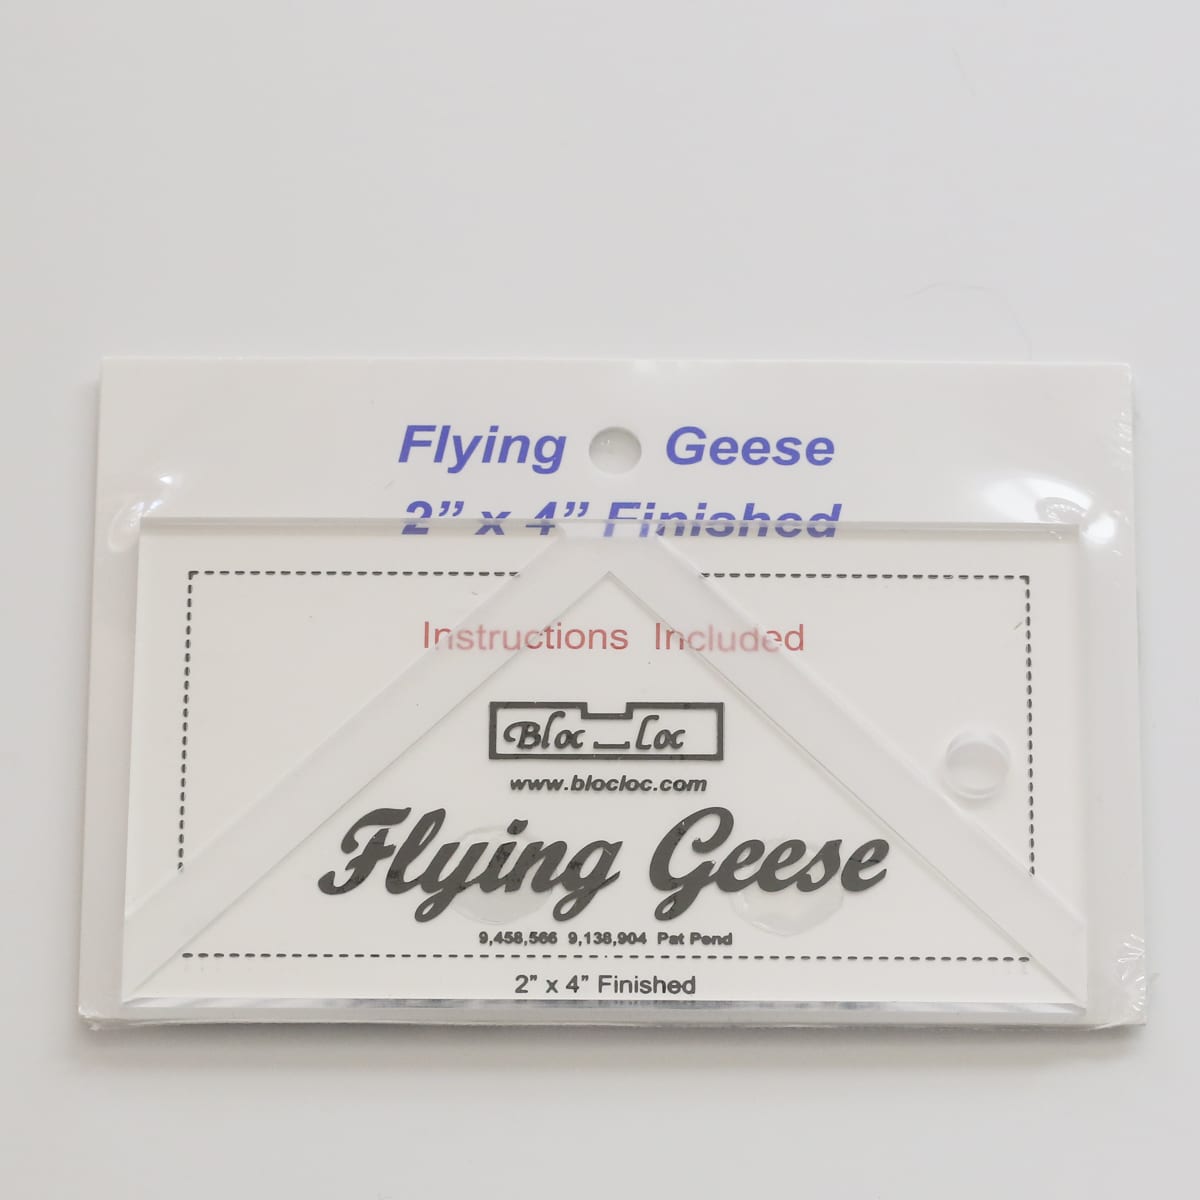 Bloc Loc Flying Geese Ruler 2 x 4